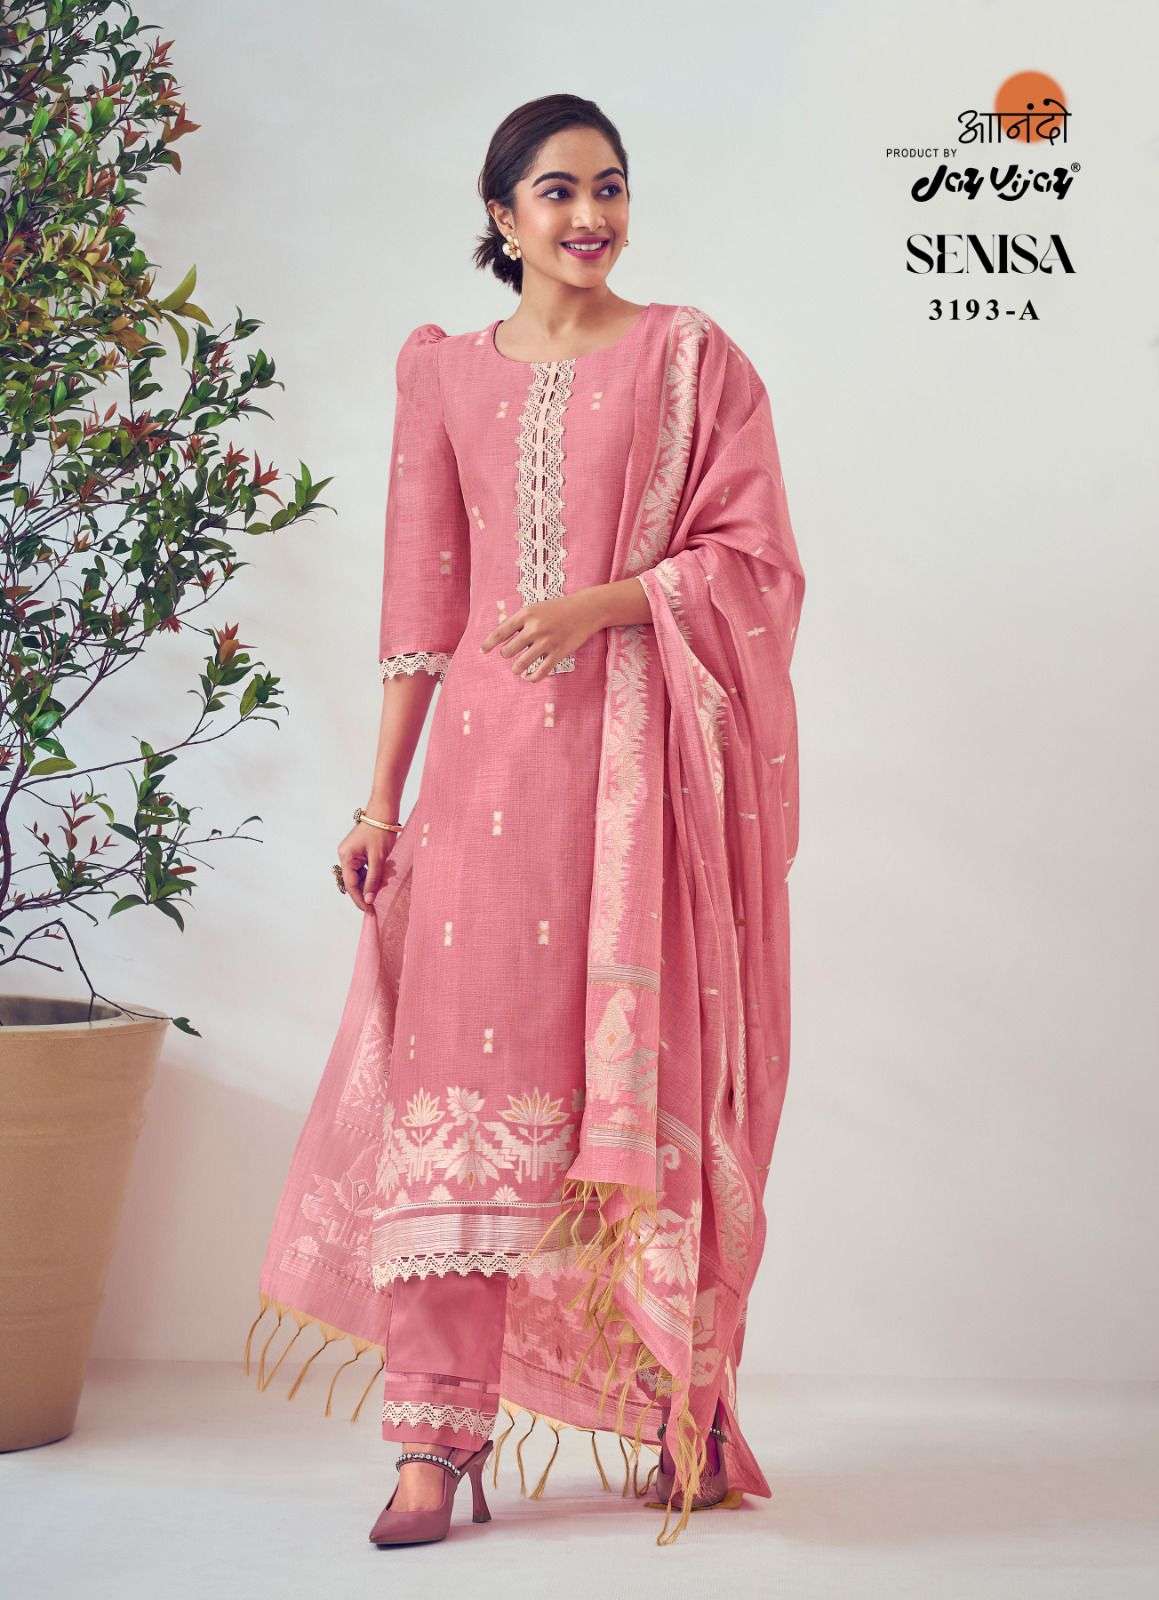 Jay Vijay Anando Senisa 3193 Fancy Jacquard Cotton Suit Catalog Suppliers